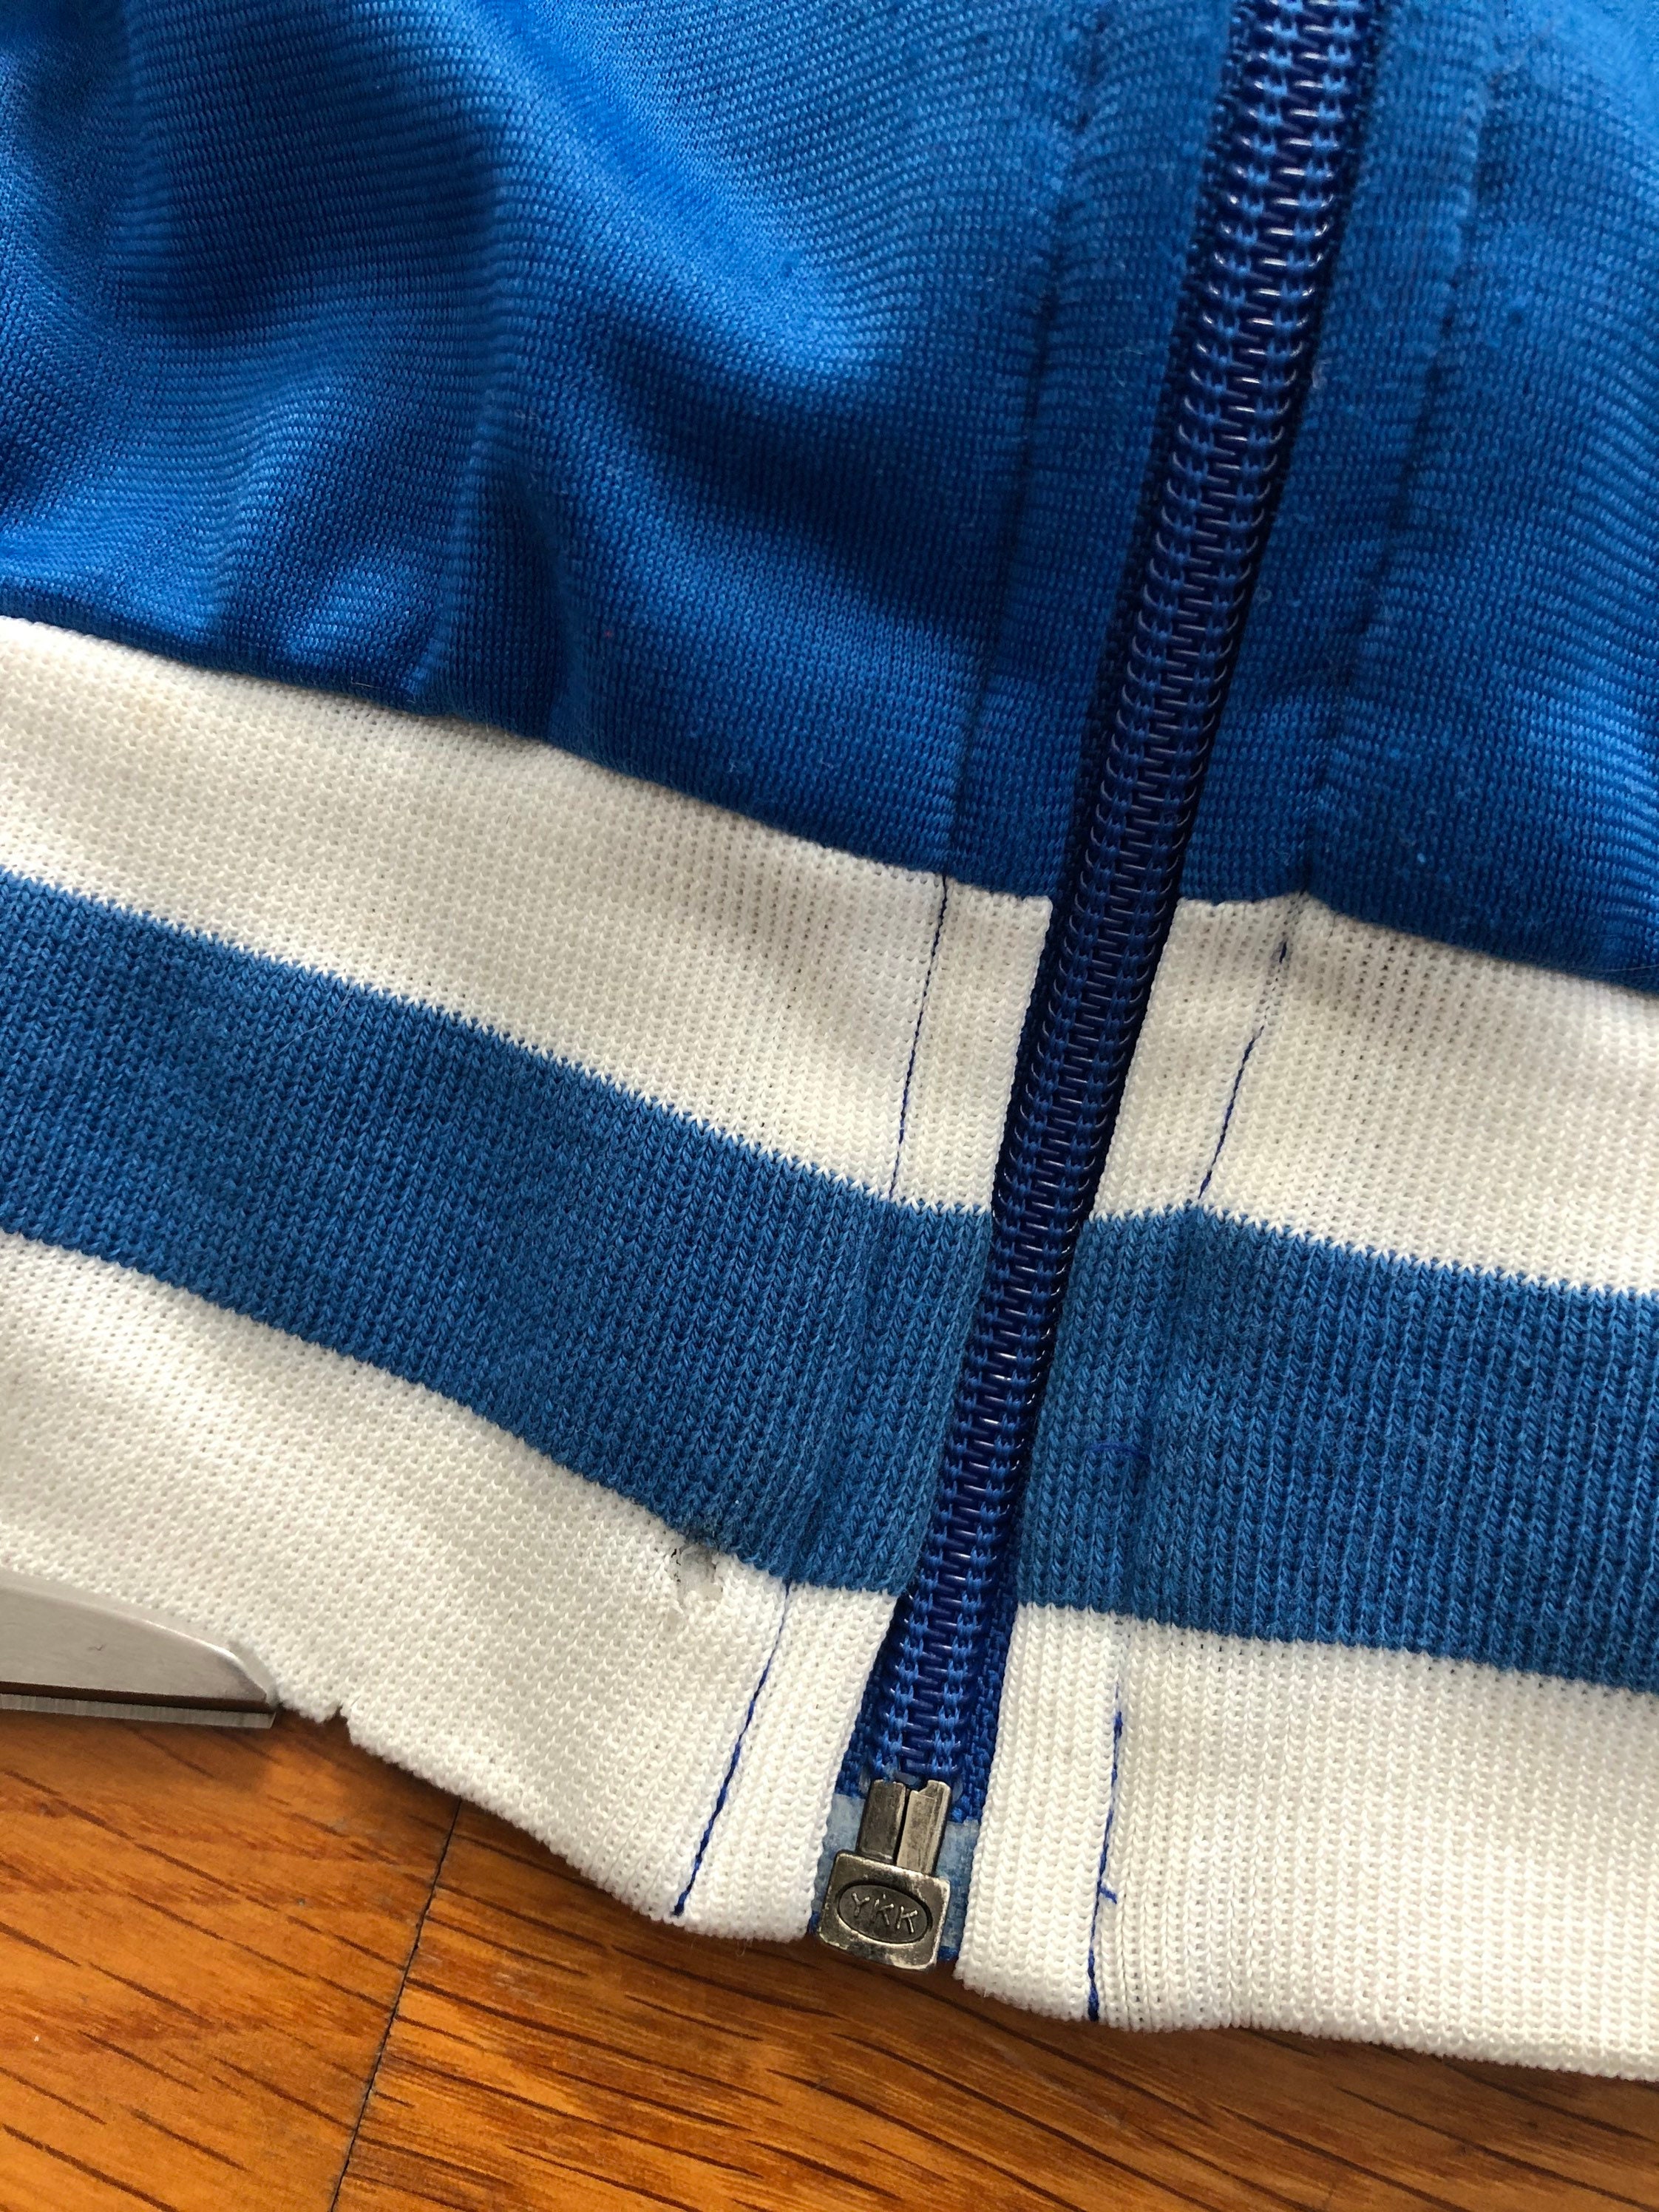 80s Nike Air Max Track Sweatshirt Jacket Men's SMALL | Etsy